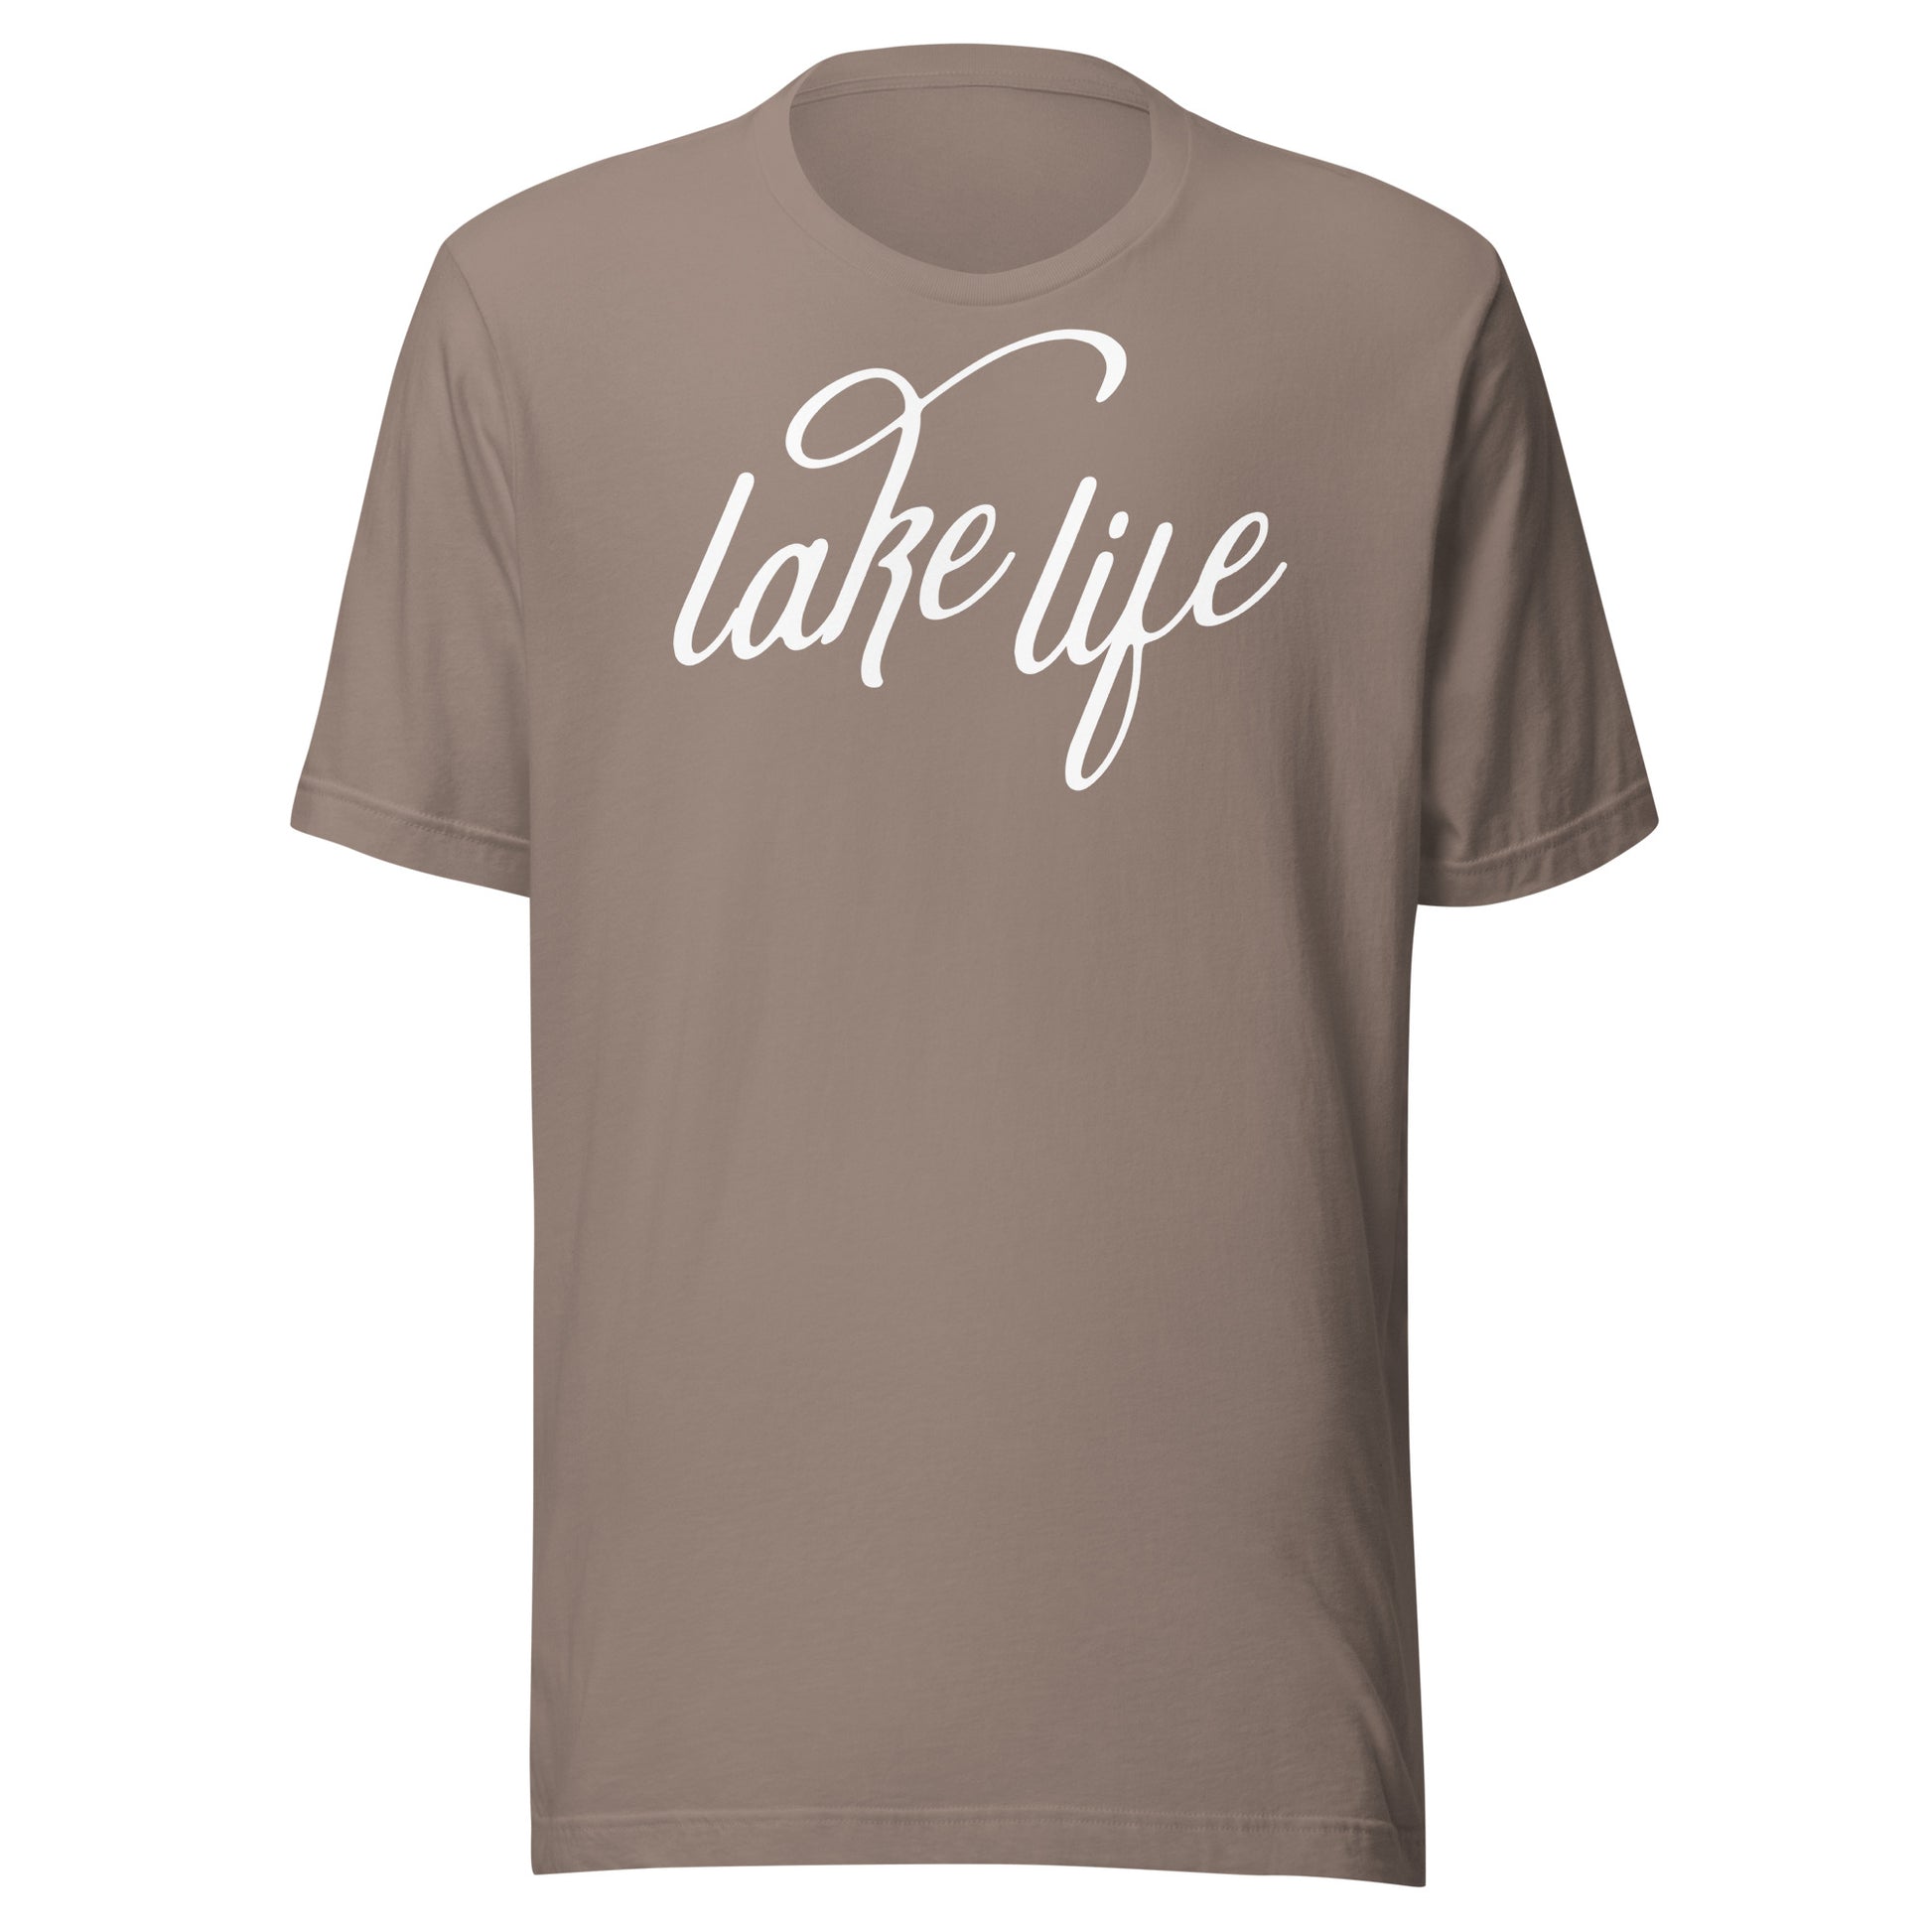 Lake Life Tshirt for weekend getaway